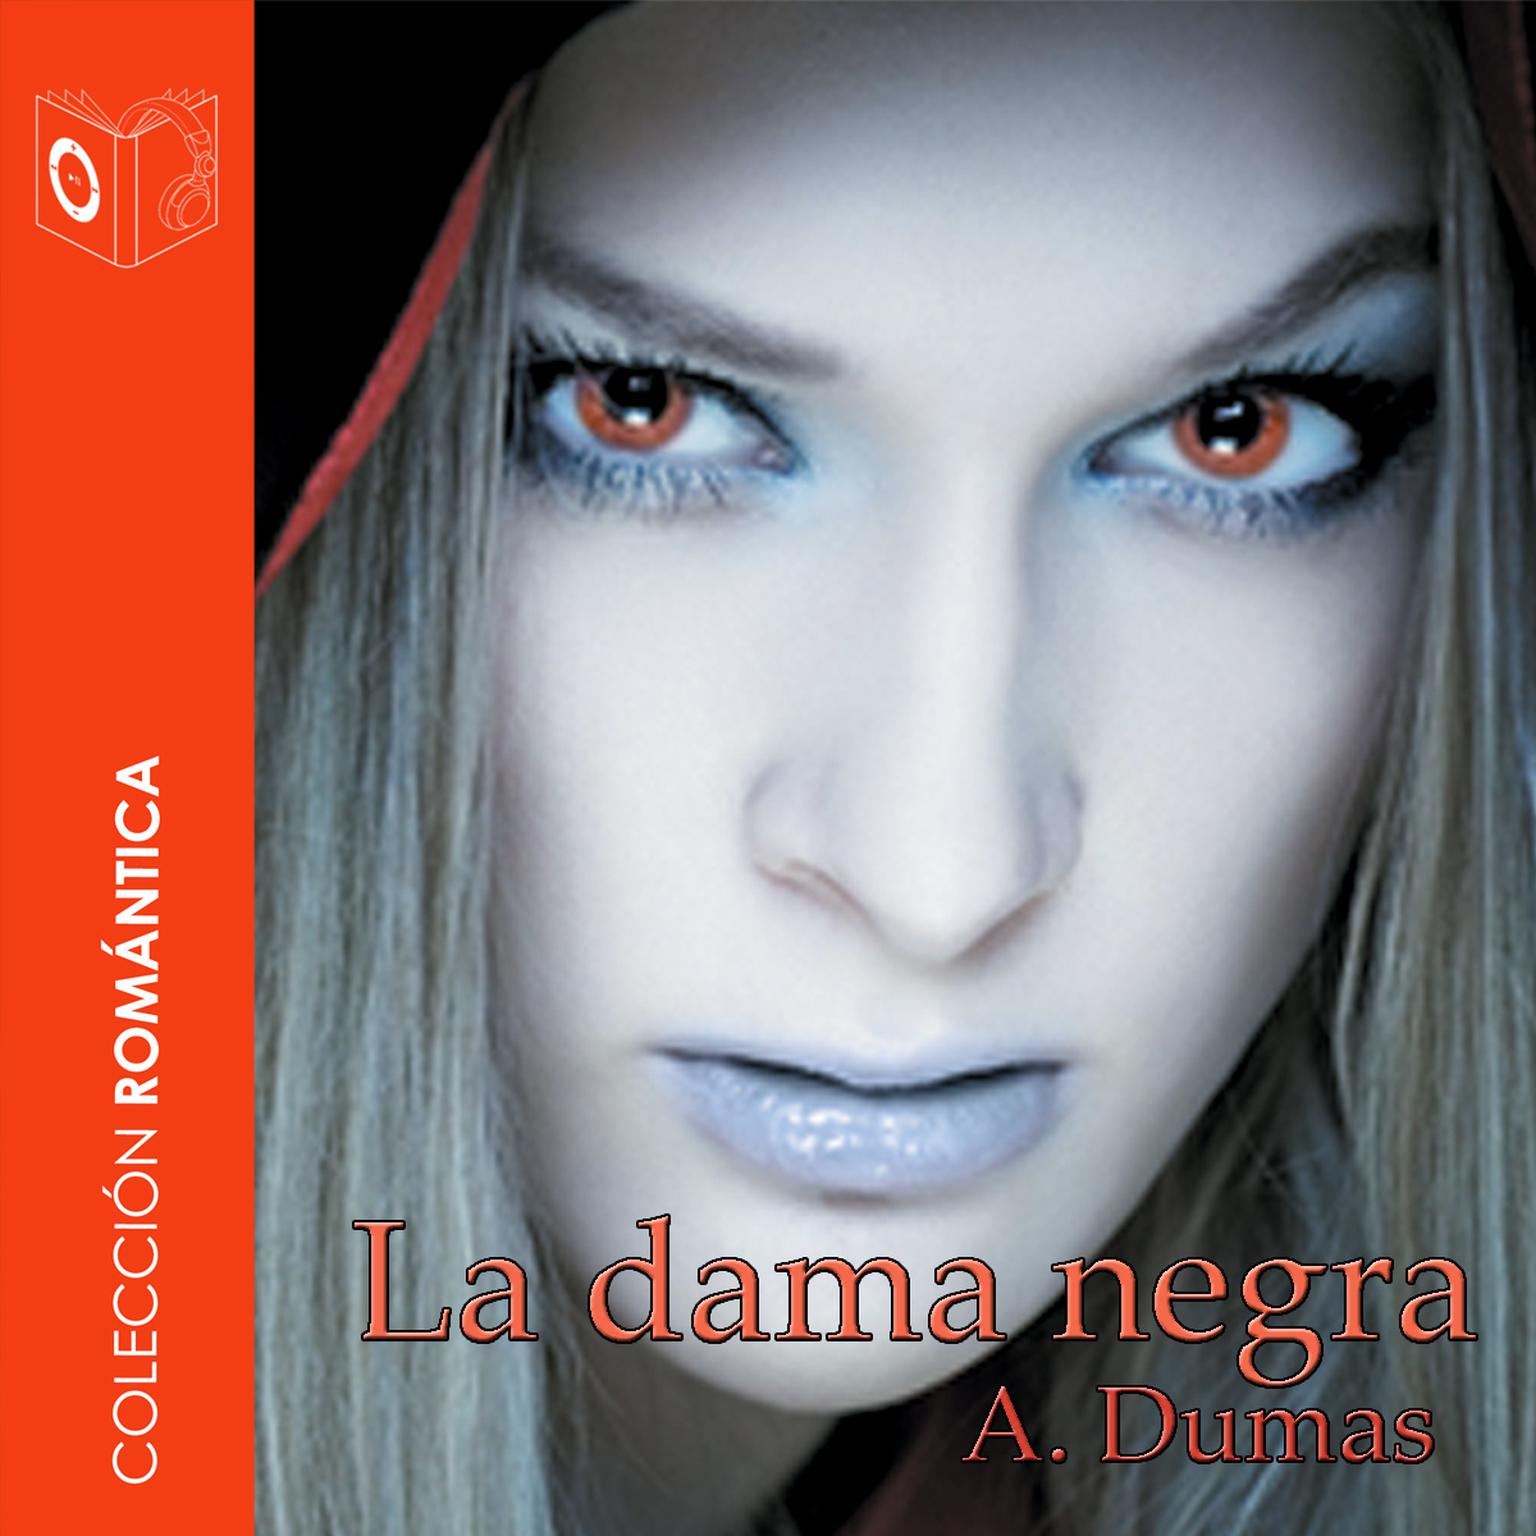 La dama negra Audiobook, by Alejandro Dumas